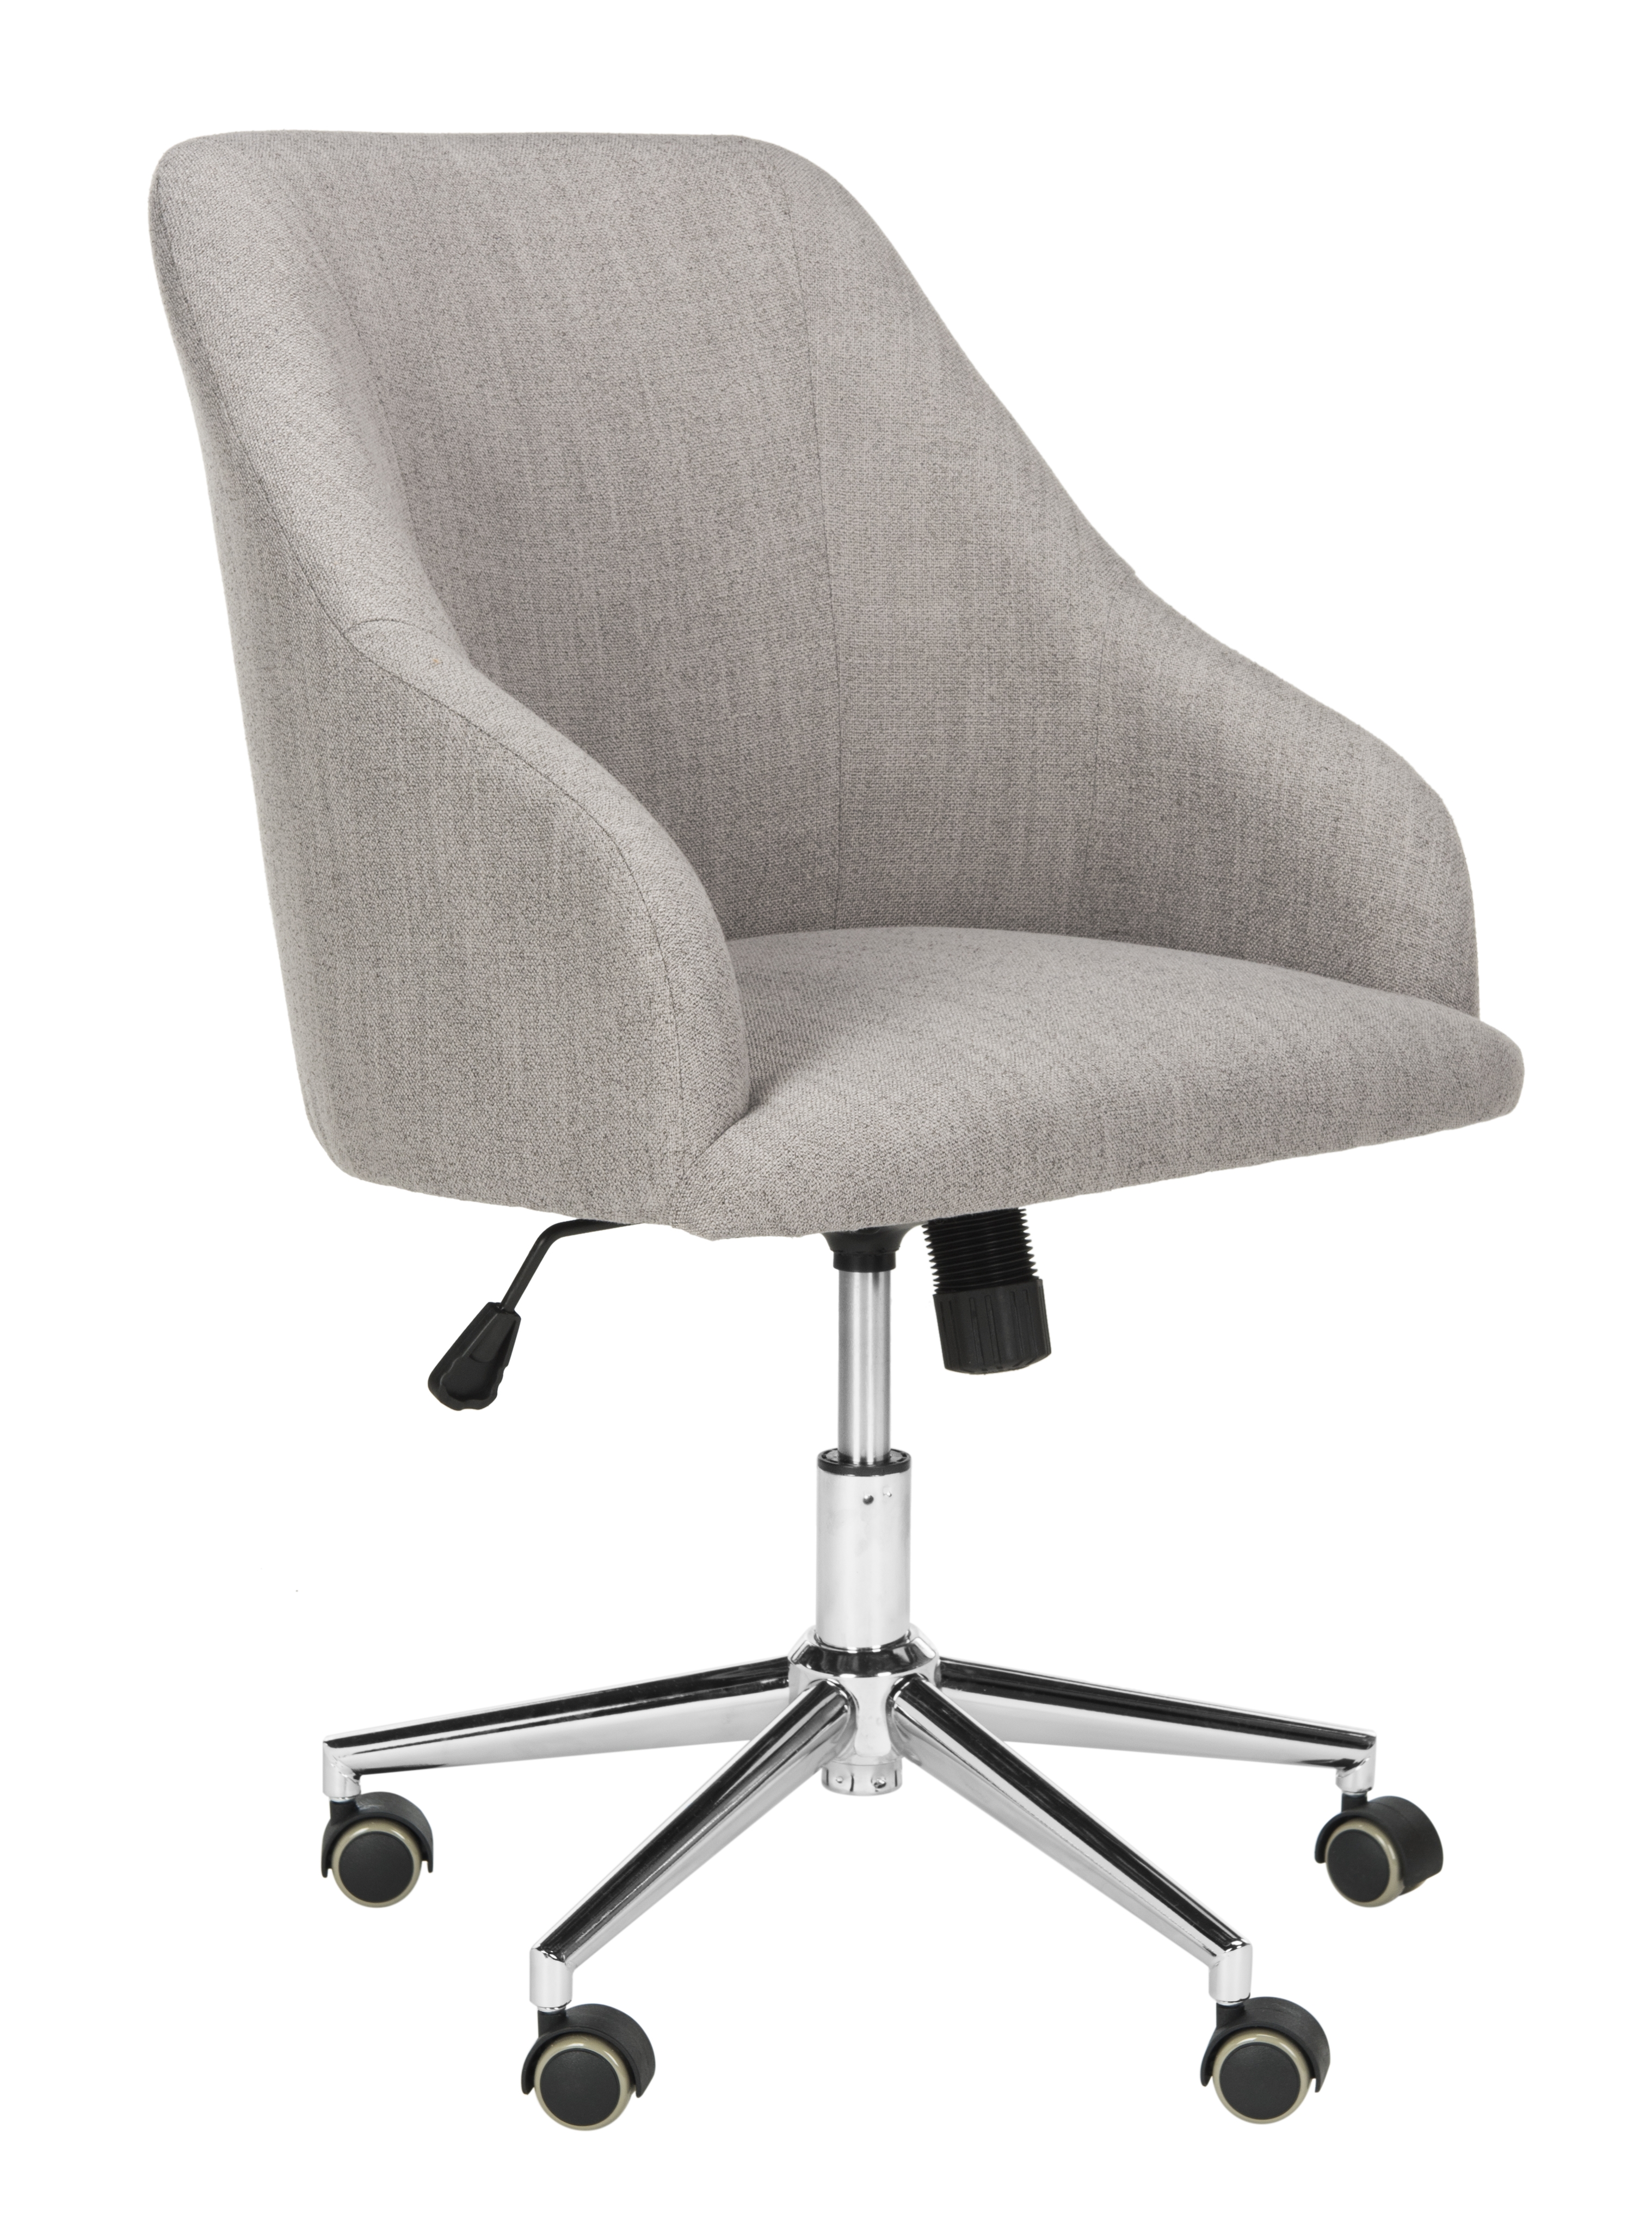 Adrienne Linen Chrome Leg Swivel Office Chair - Grey/Chrome - Arlo Home - Image 0